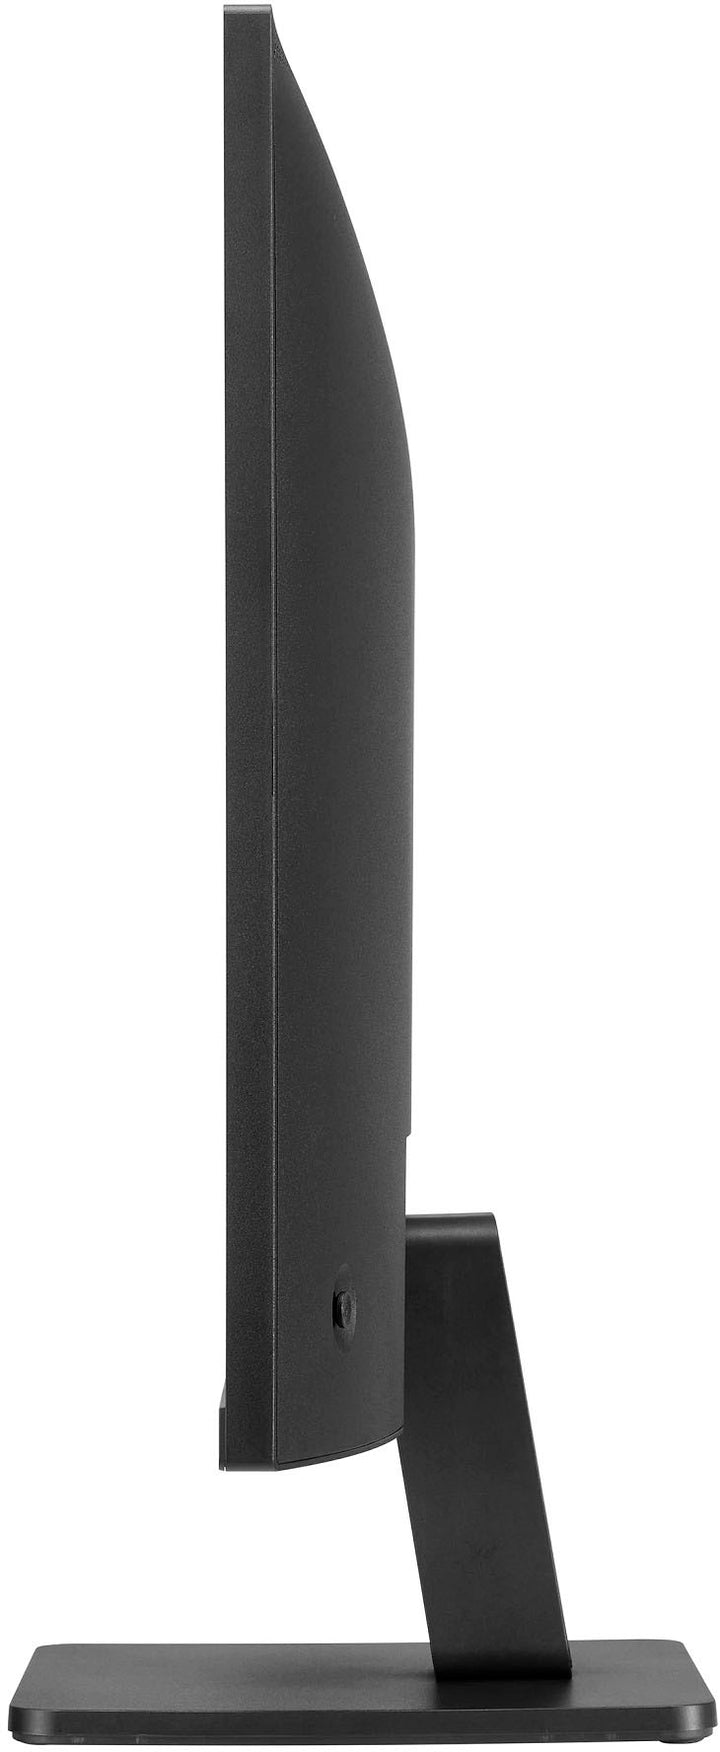 LG - 27" IPS FHD FreeSync Monitor (HDMI) - Black_7